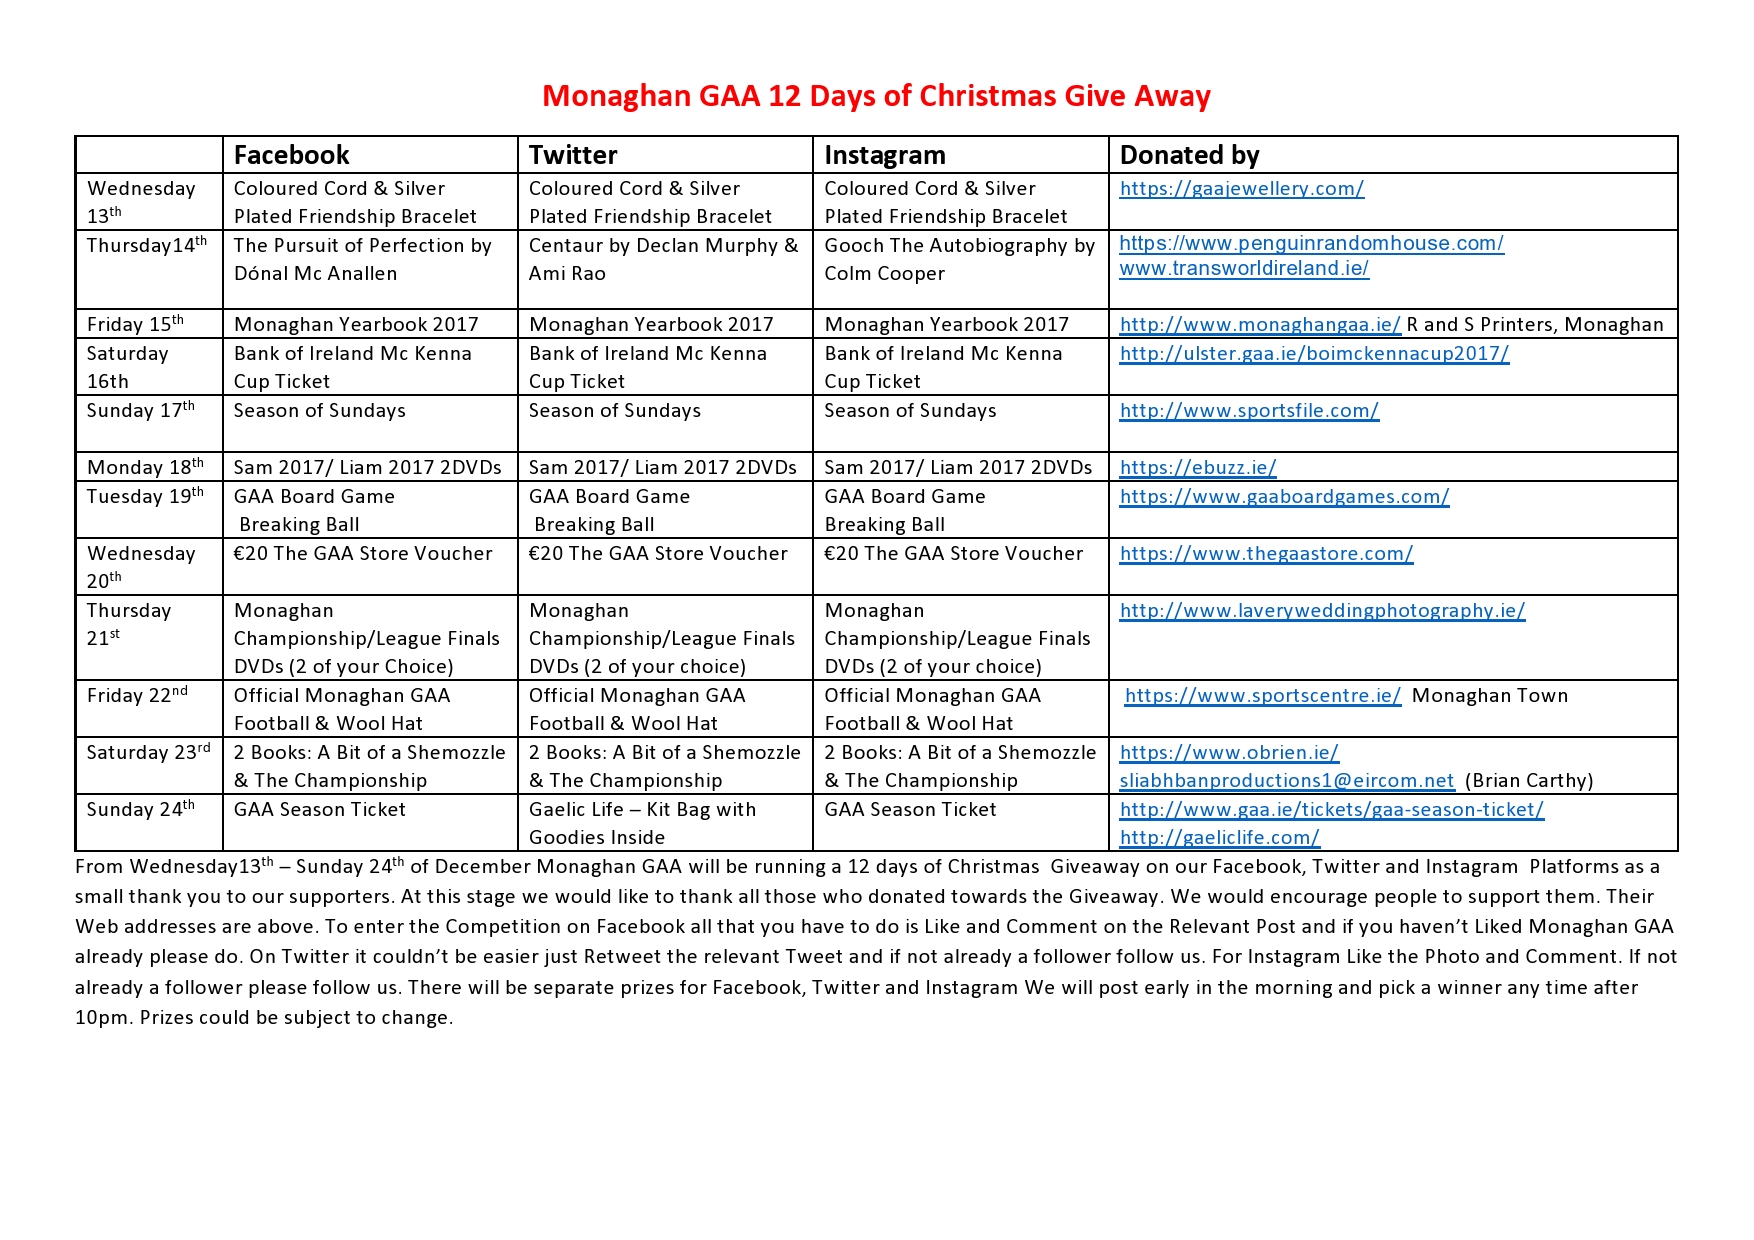 Monaghan GAA 12 Days of Christmas Giveaway 2017